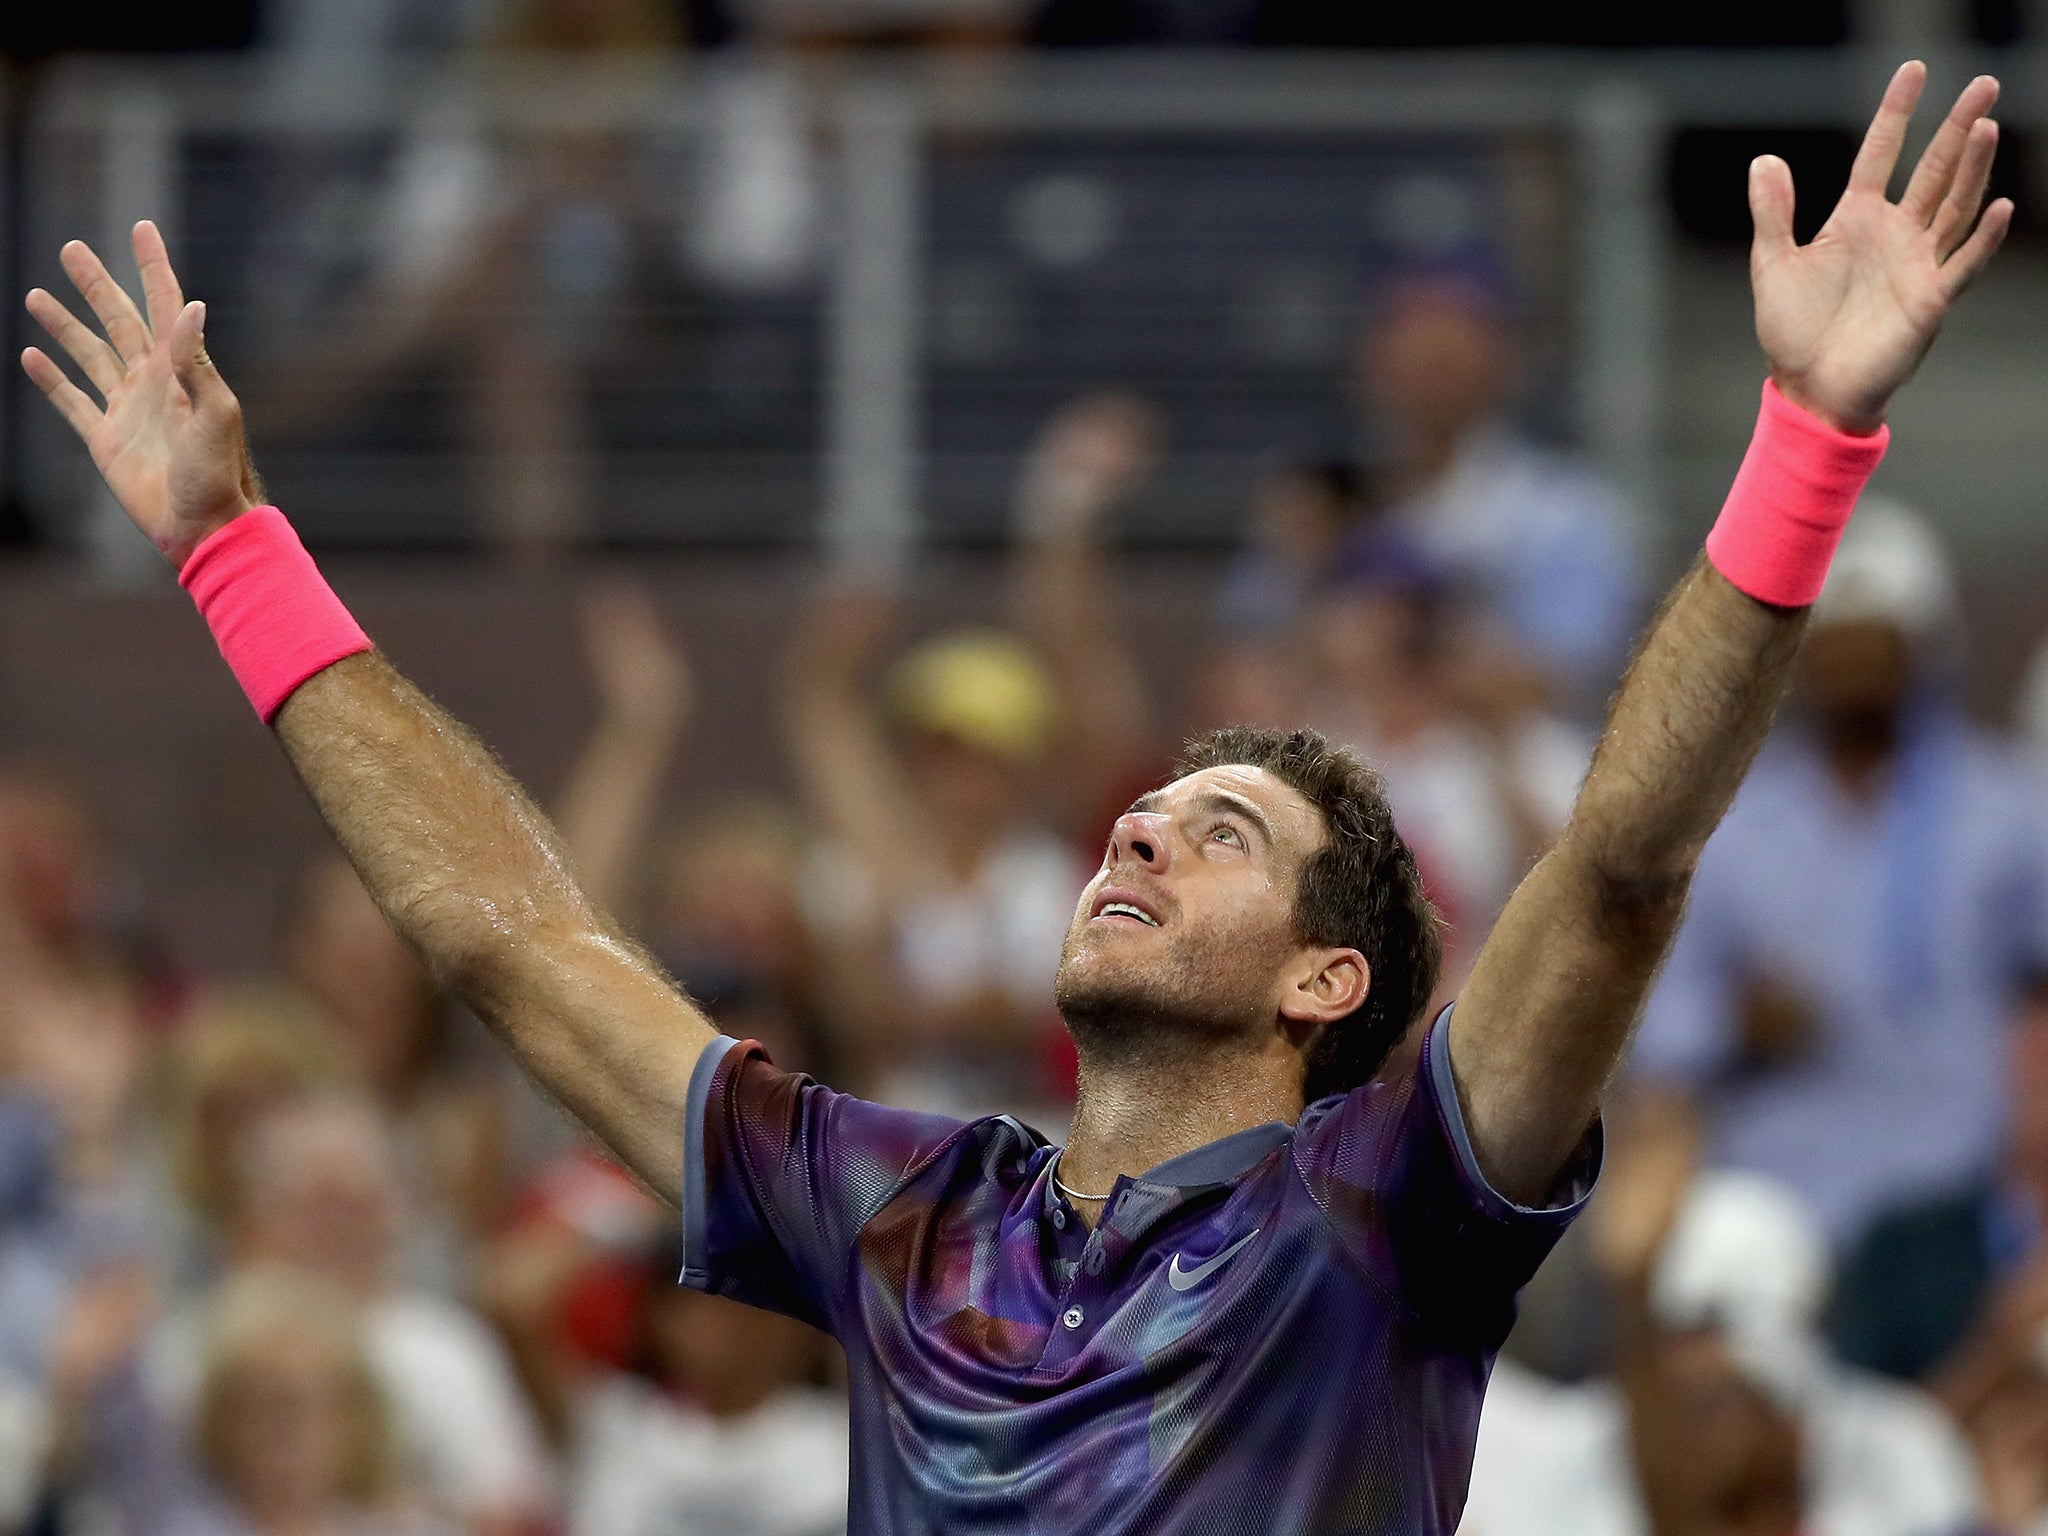 Juan Martiin del Potro celebrates his victory over Dominic Thiem in the US Open fourth round